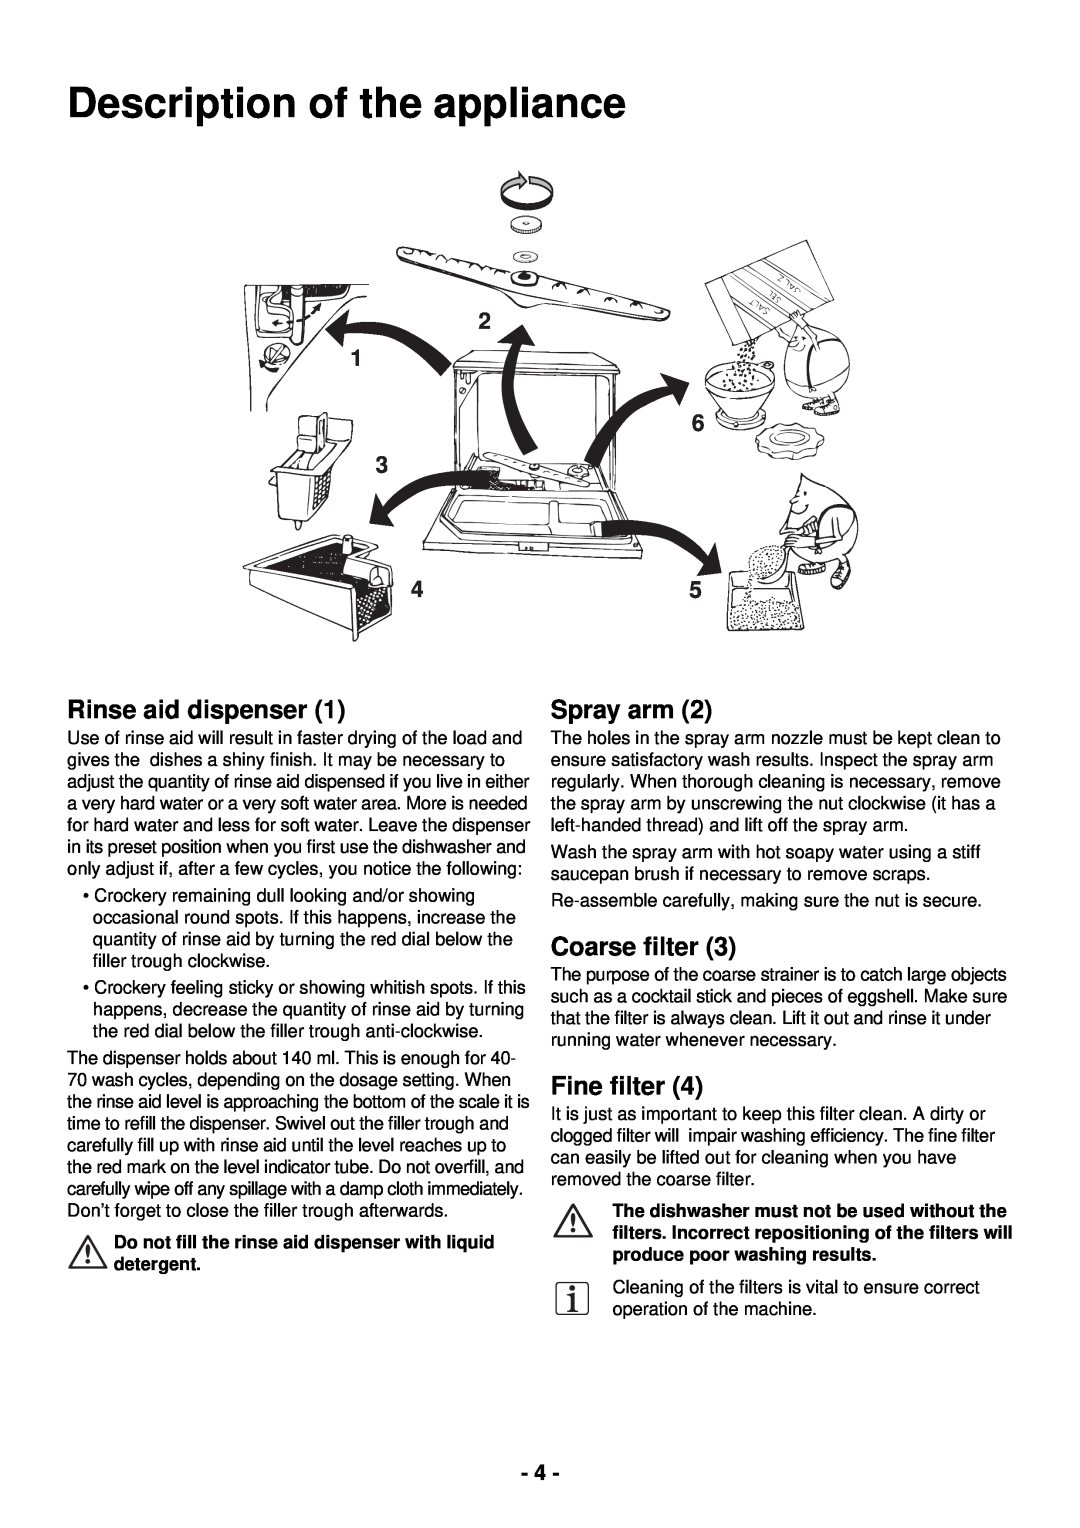 Zanussi ZSF 2400 manual Description of the appliance, Rinse aid dispenser, Spray arm, Coarse ﬁlter, Fine ﬁlter 